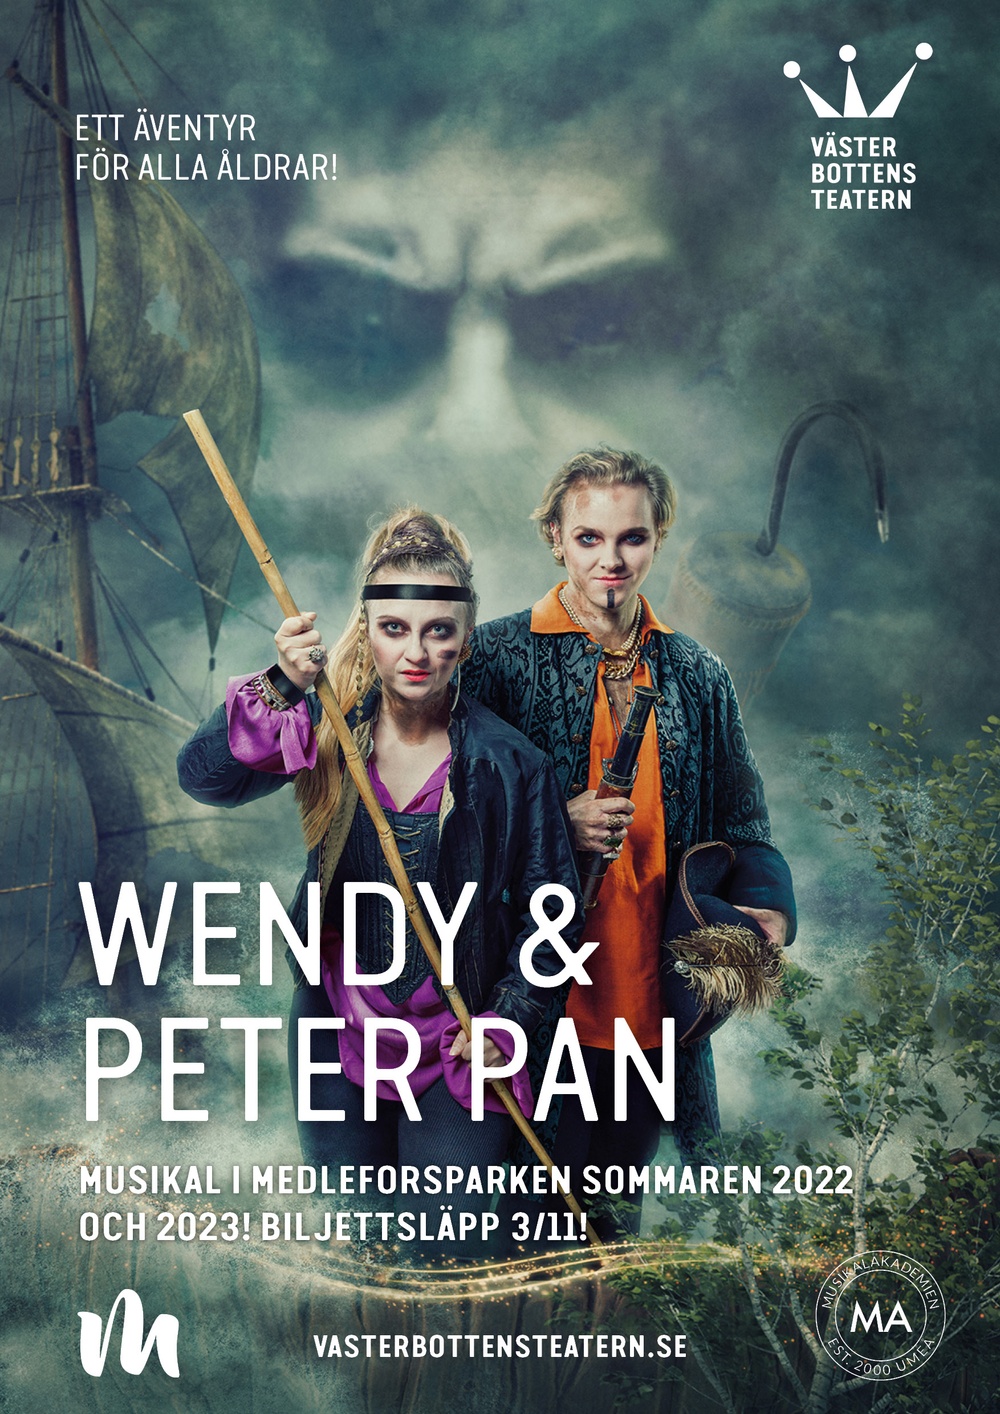 Wendy och Peter Pan. Foto: LisaLove Bäckman
Wendy - Emilia Ekström
Peter Pan - Joel Götell